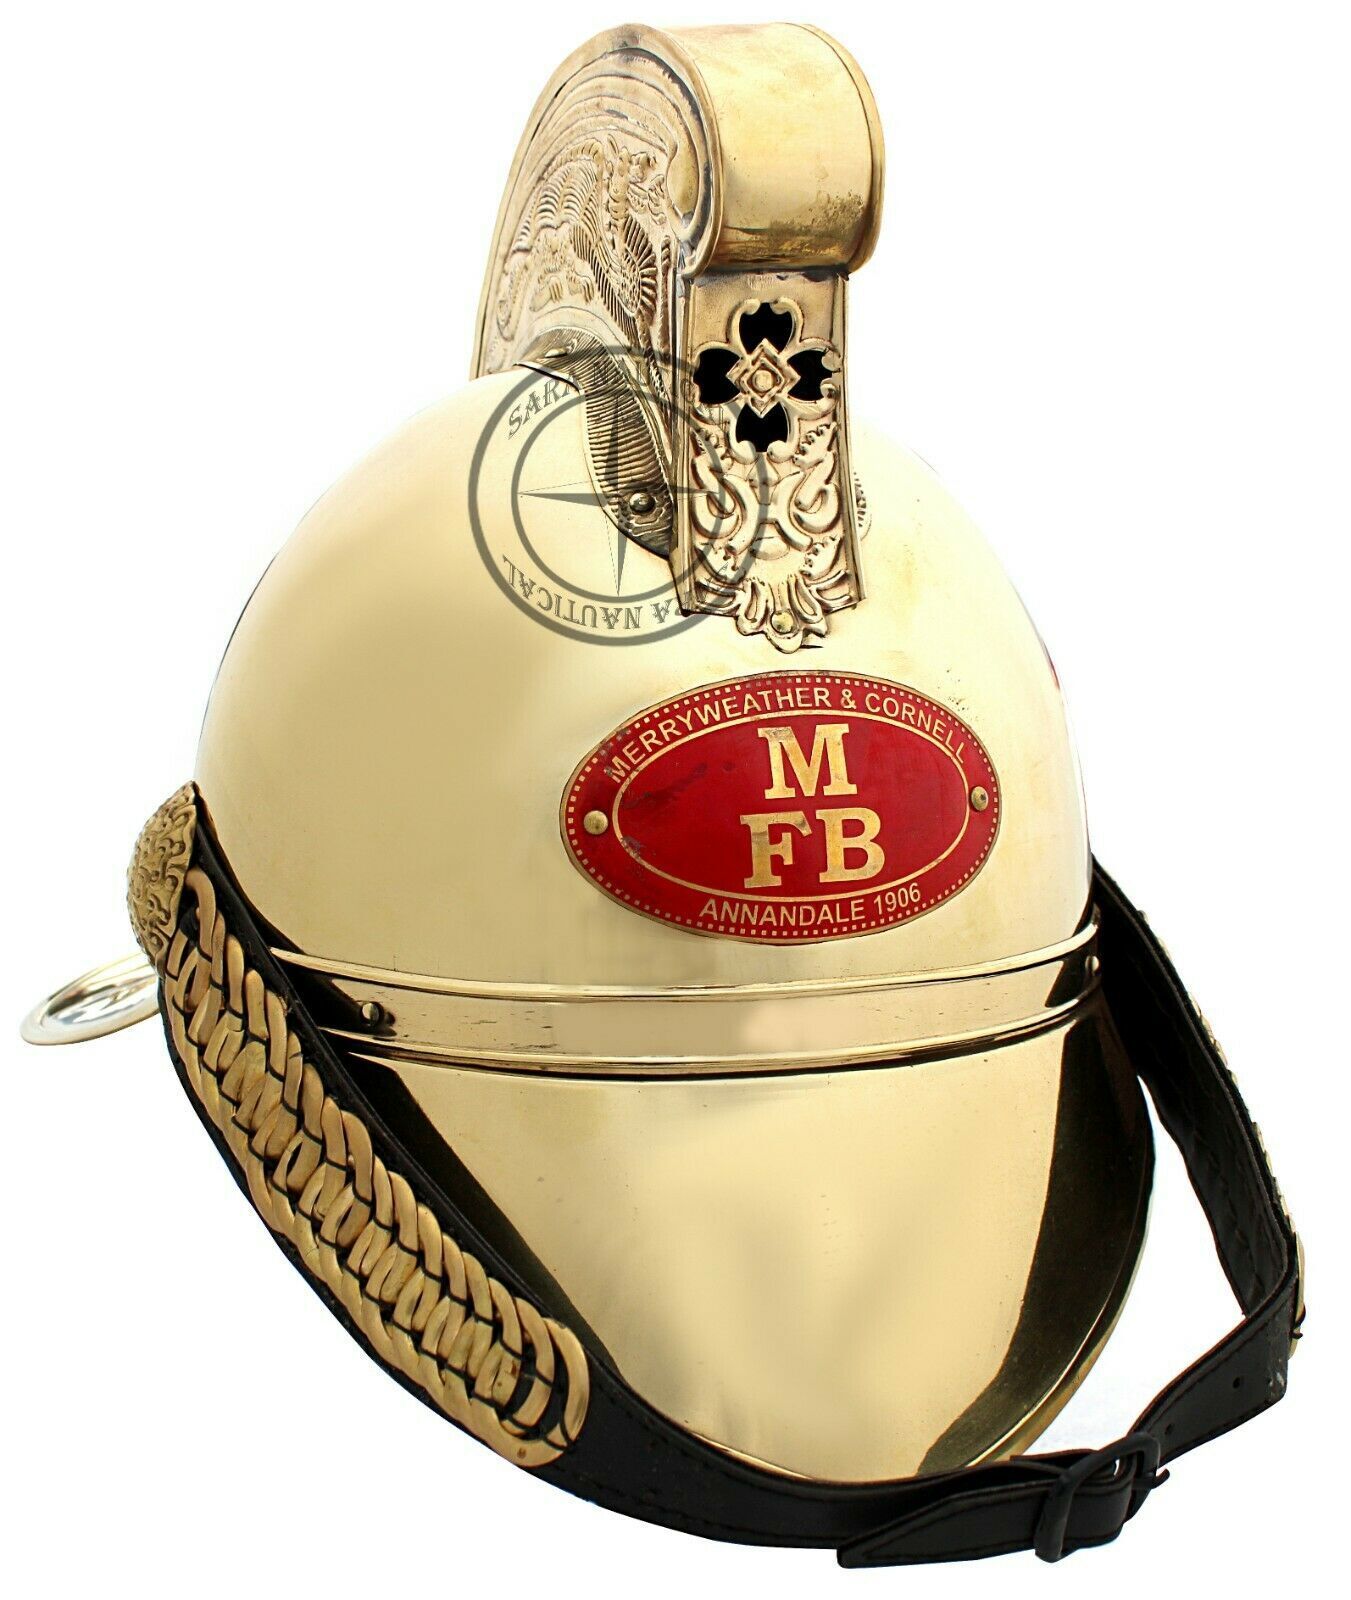 M FB Helmet Victorian Fire Fighter Helm Brass Fireman Helmet Merry Weather